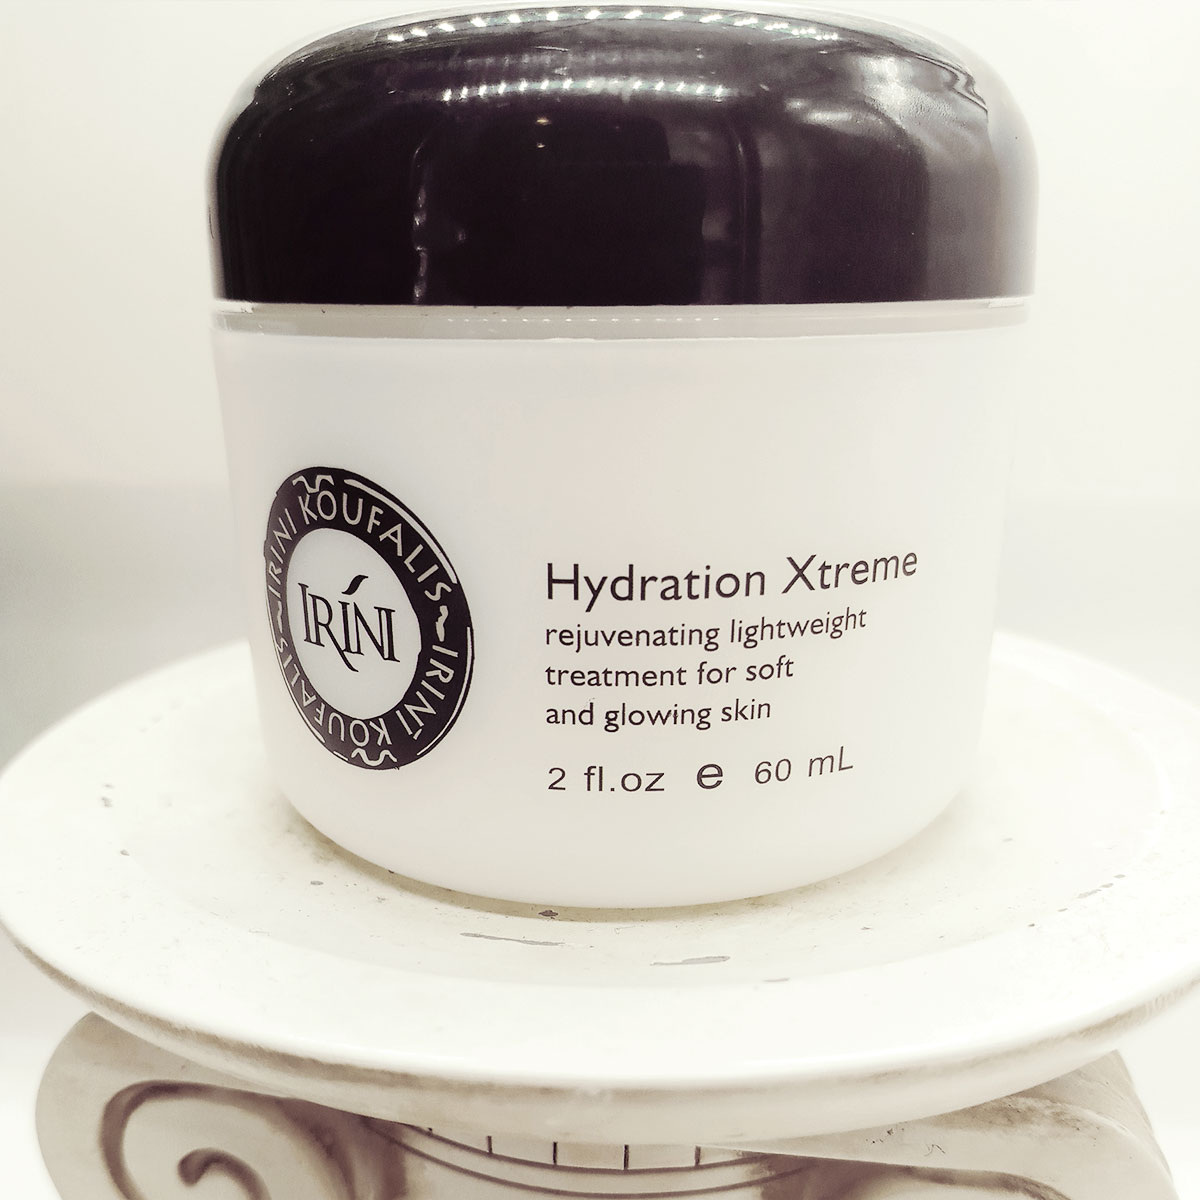 hydration xtreme skin treatment